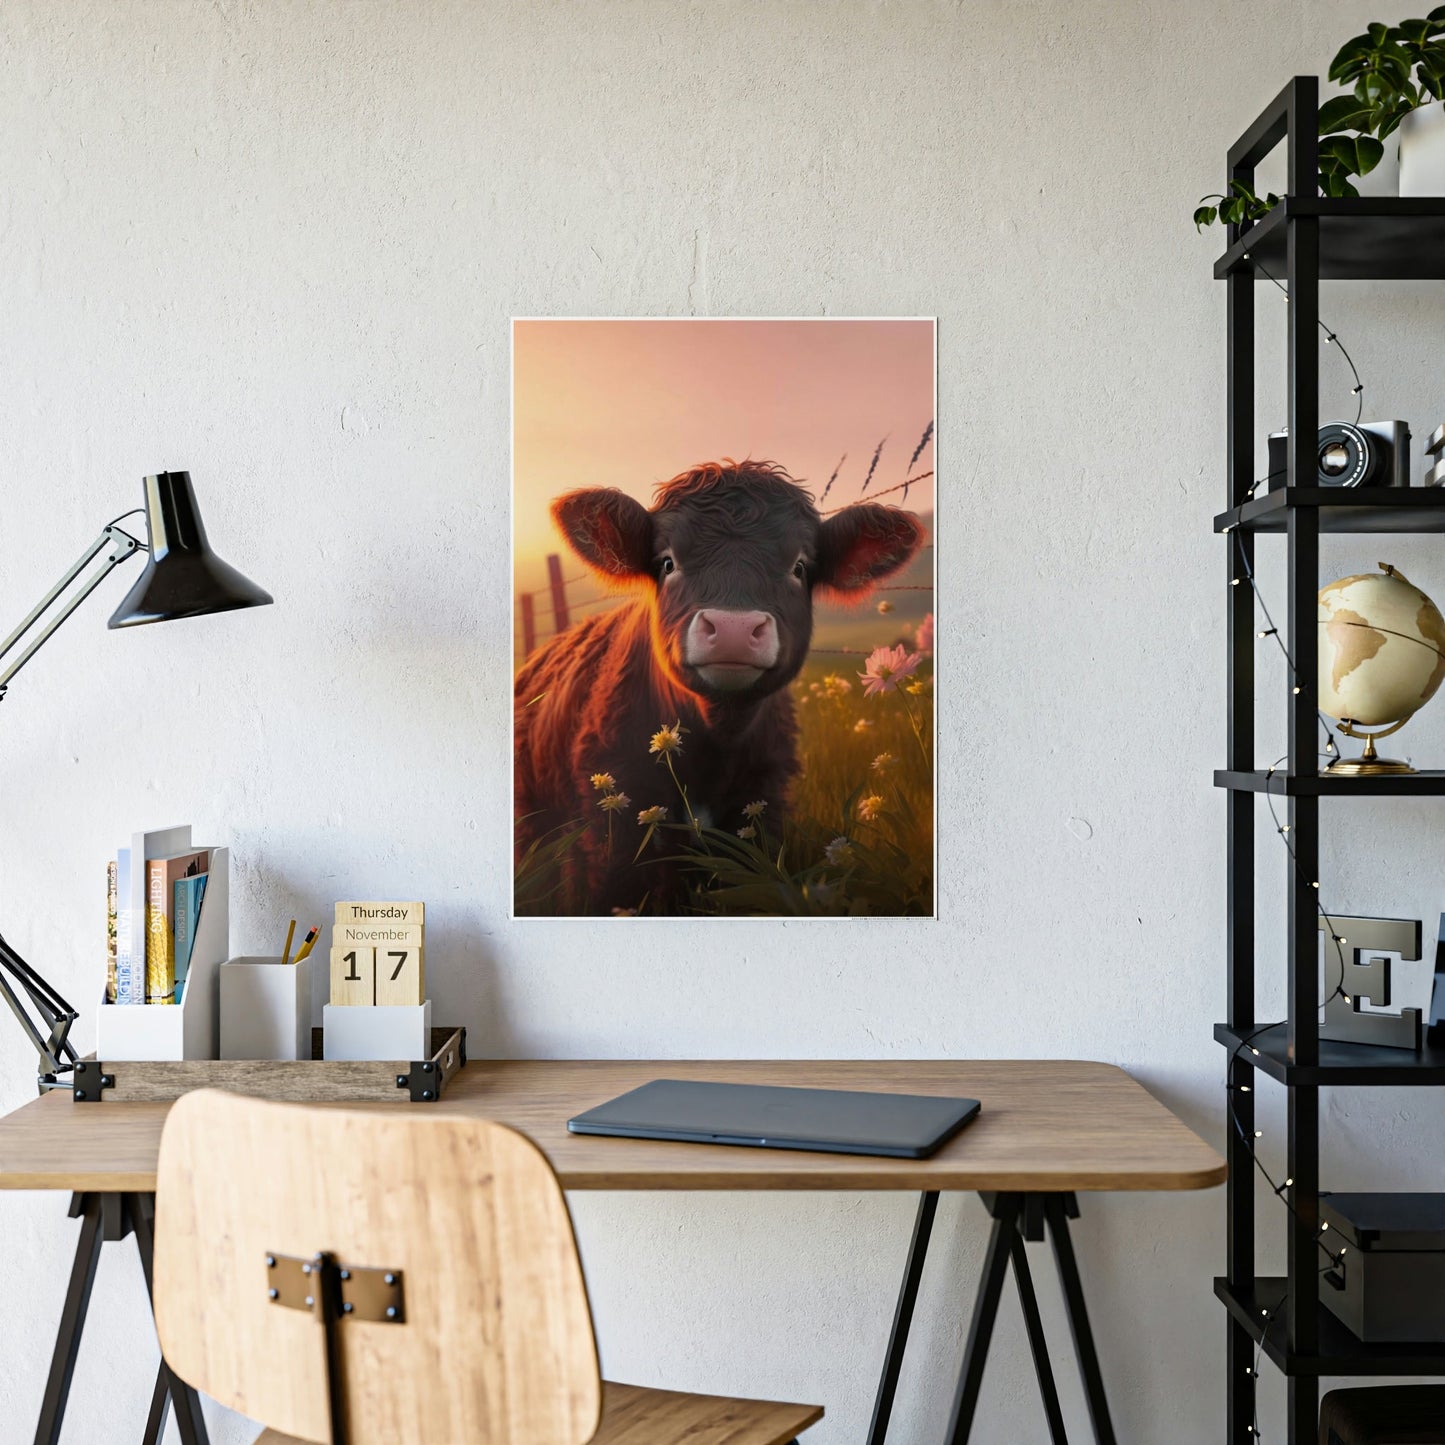 Serene Bovine Beauty: Framed Poster Wall Art Featuring a Stunning Cow Portrait